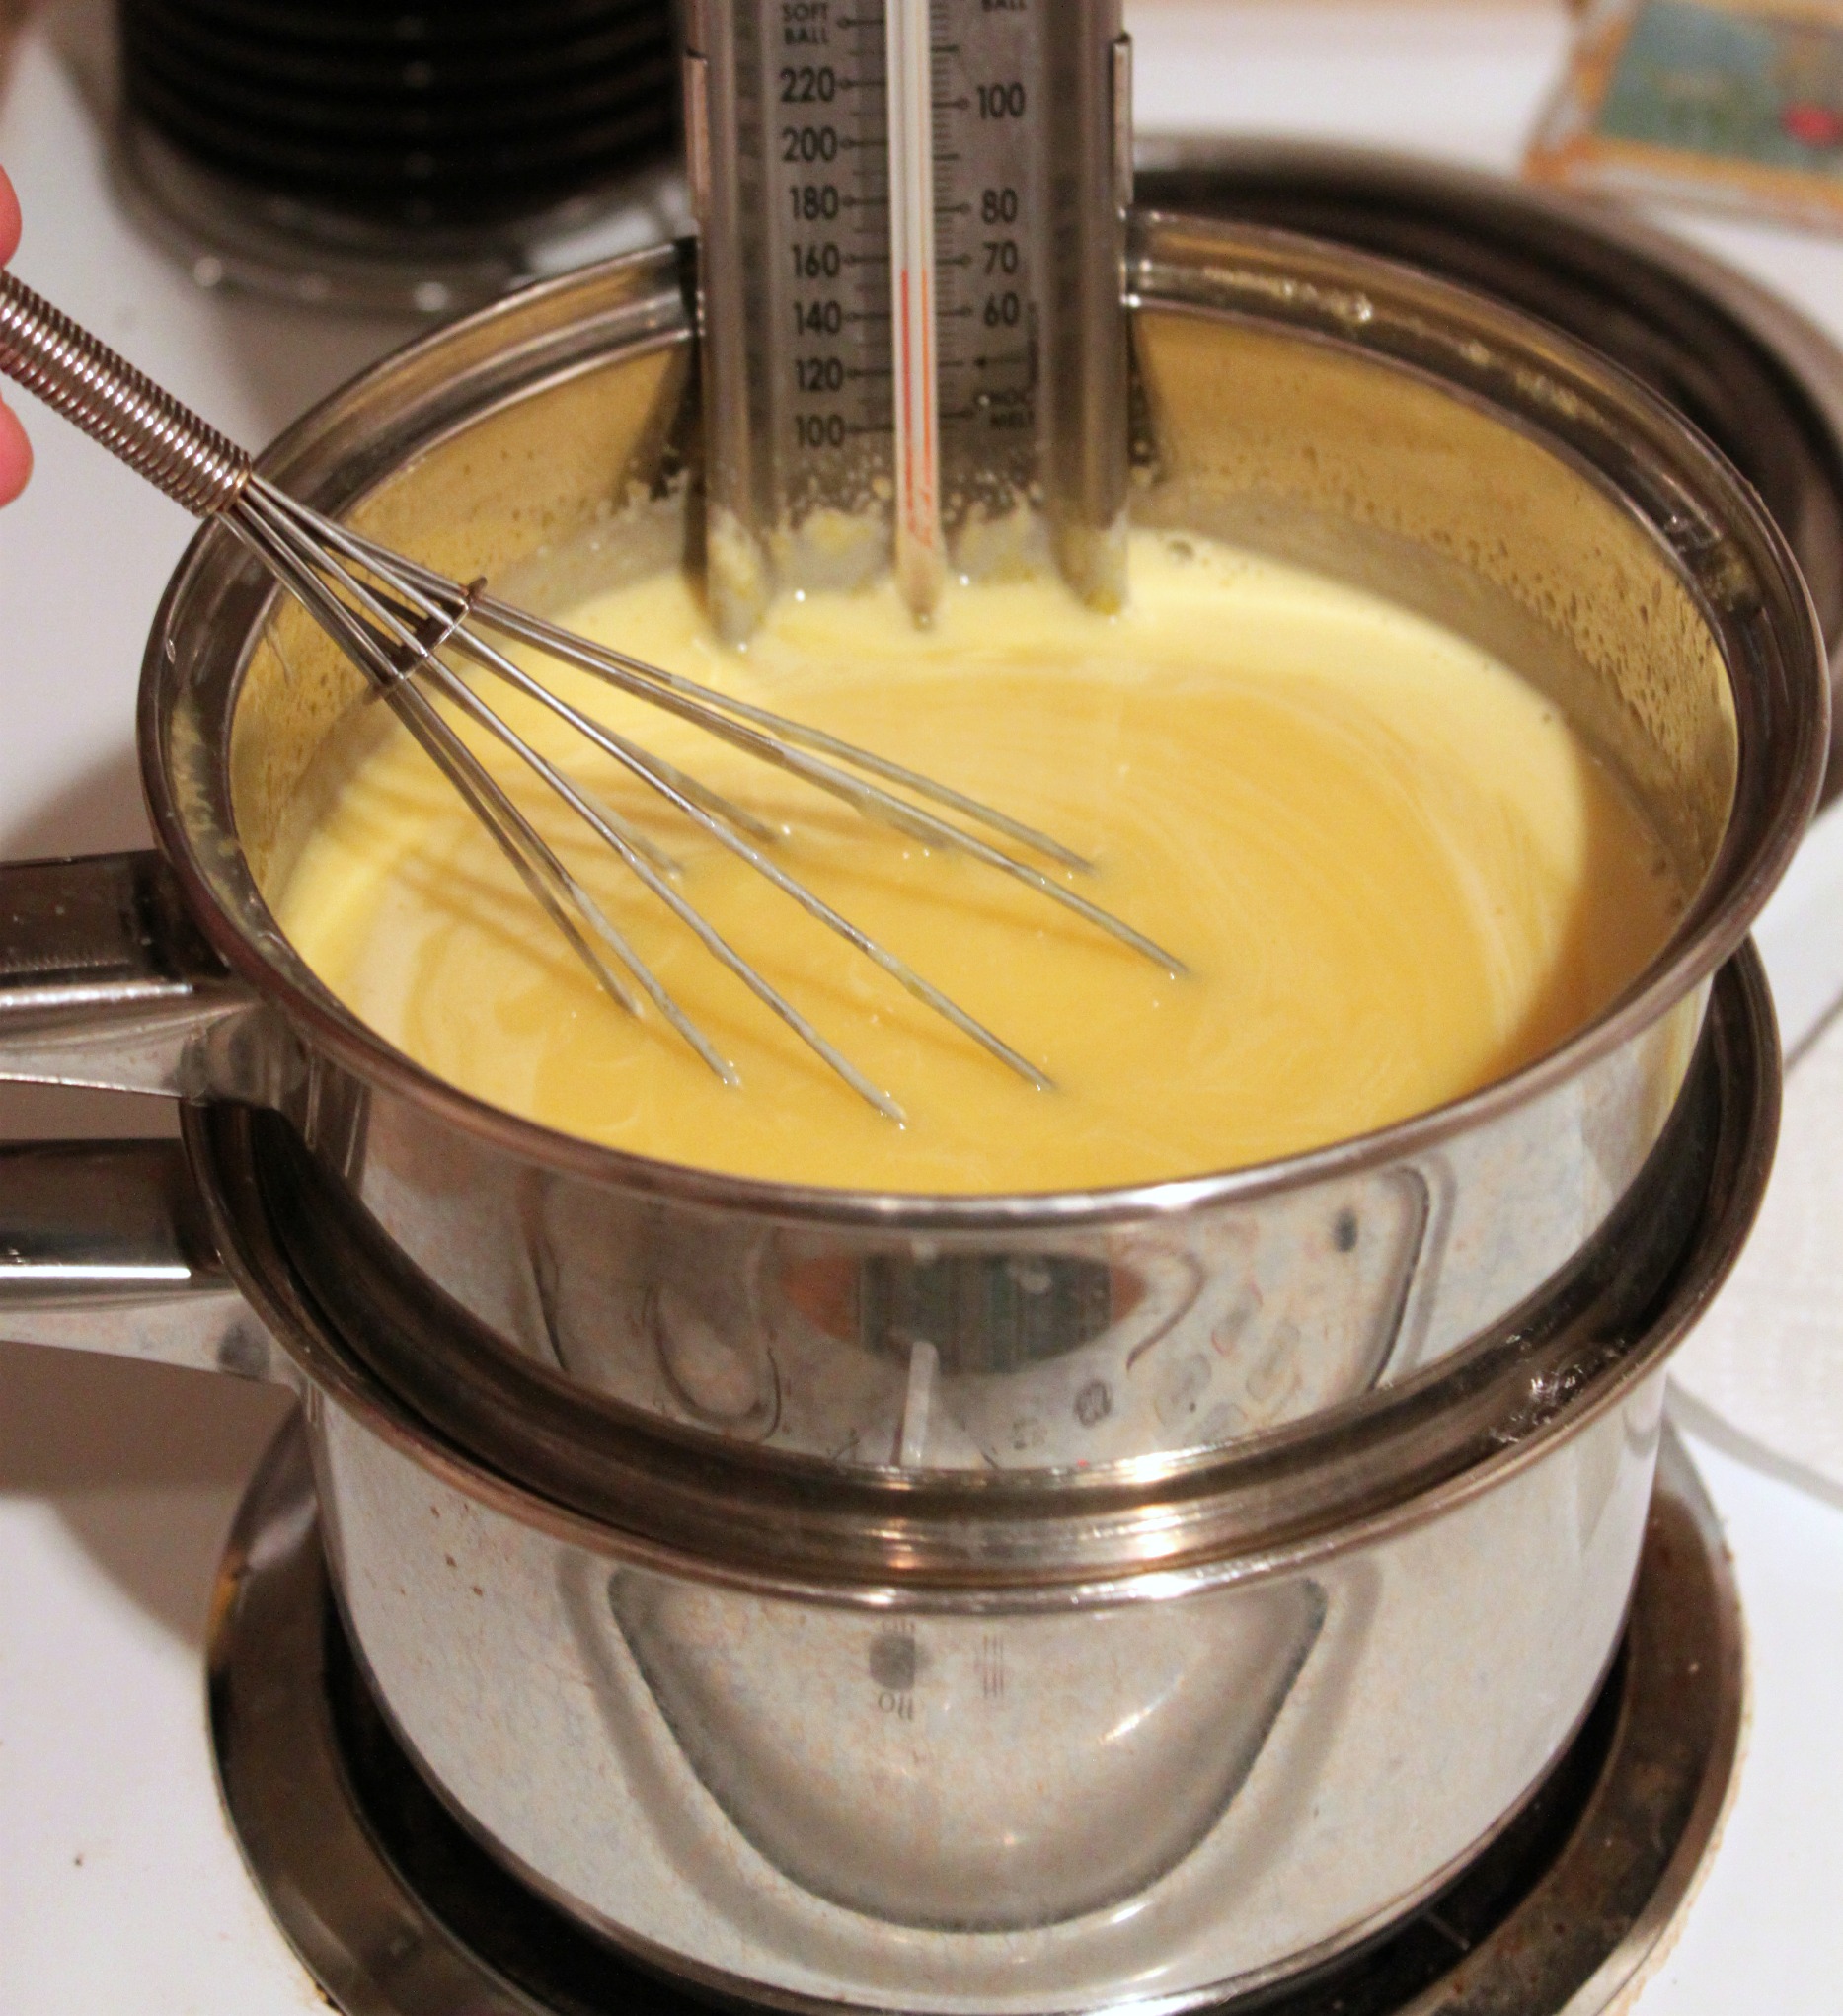 Stir constantly over low heat until lemon curd reaches 170F